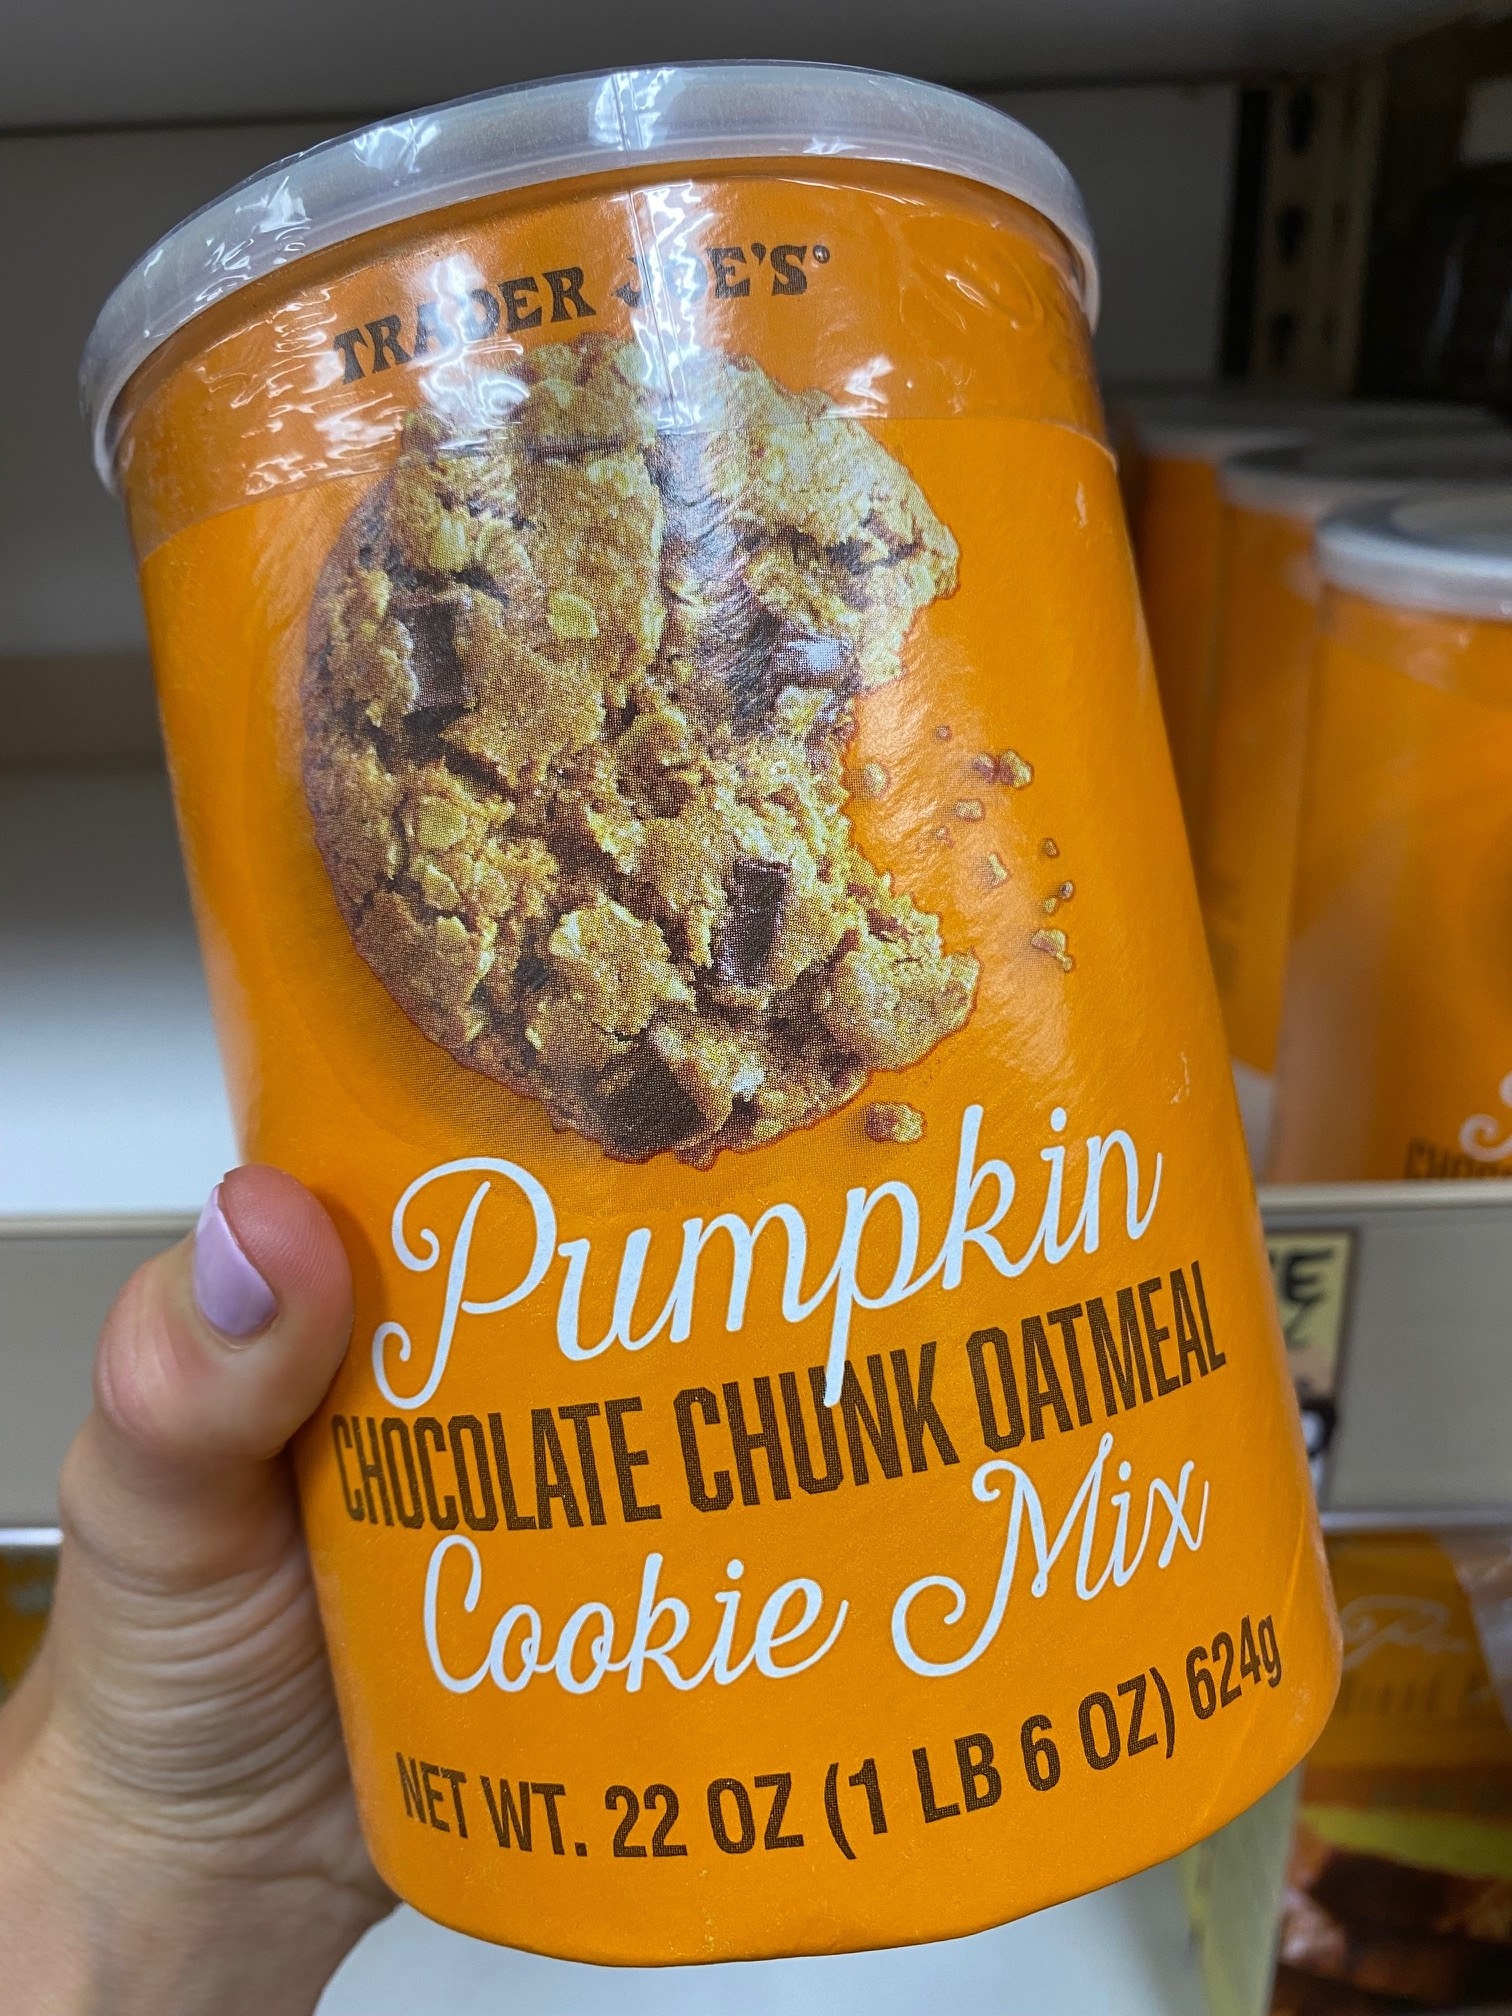 Pumpkin Chocolate Chunk Oatmeal Cookie Mix